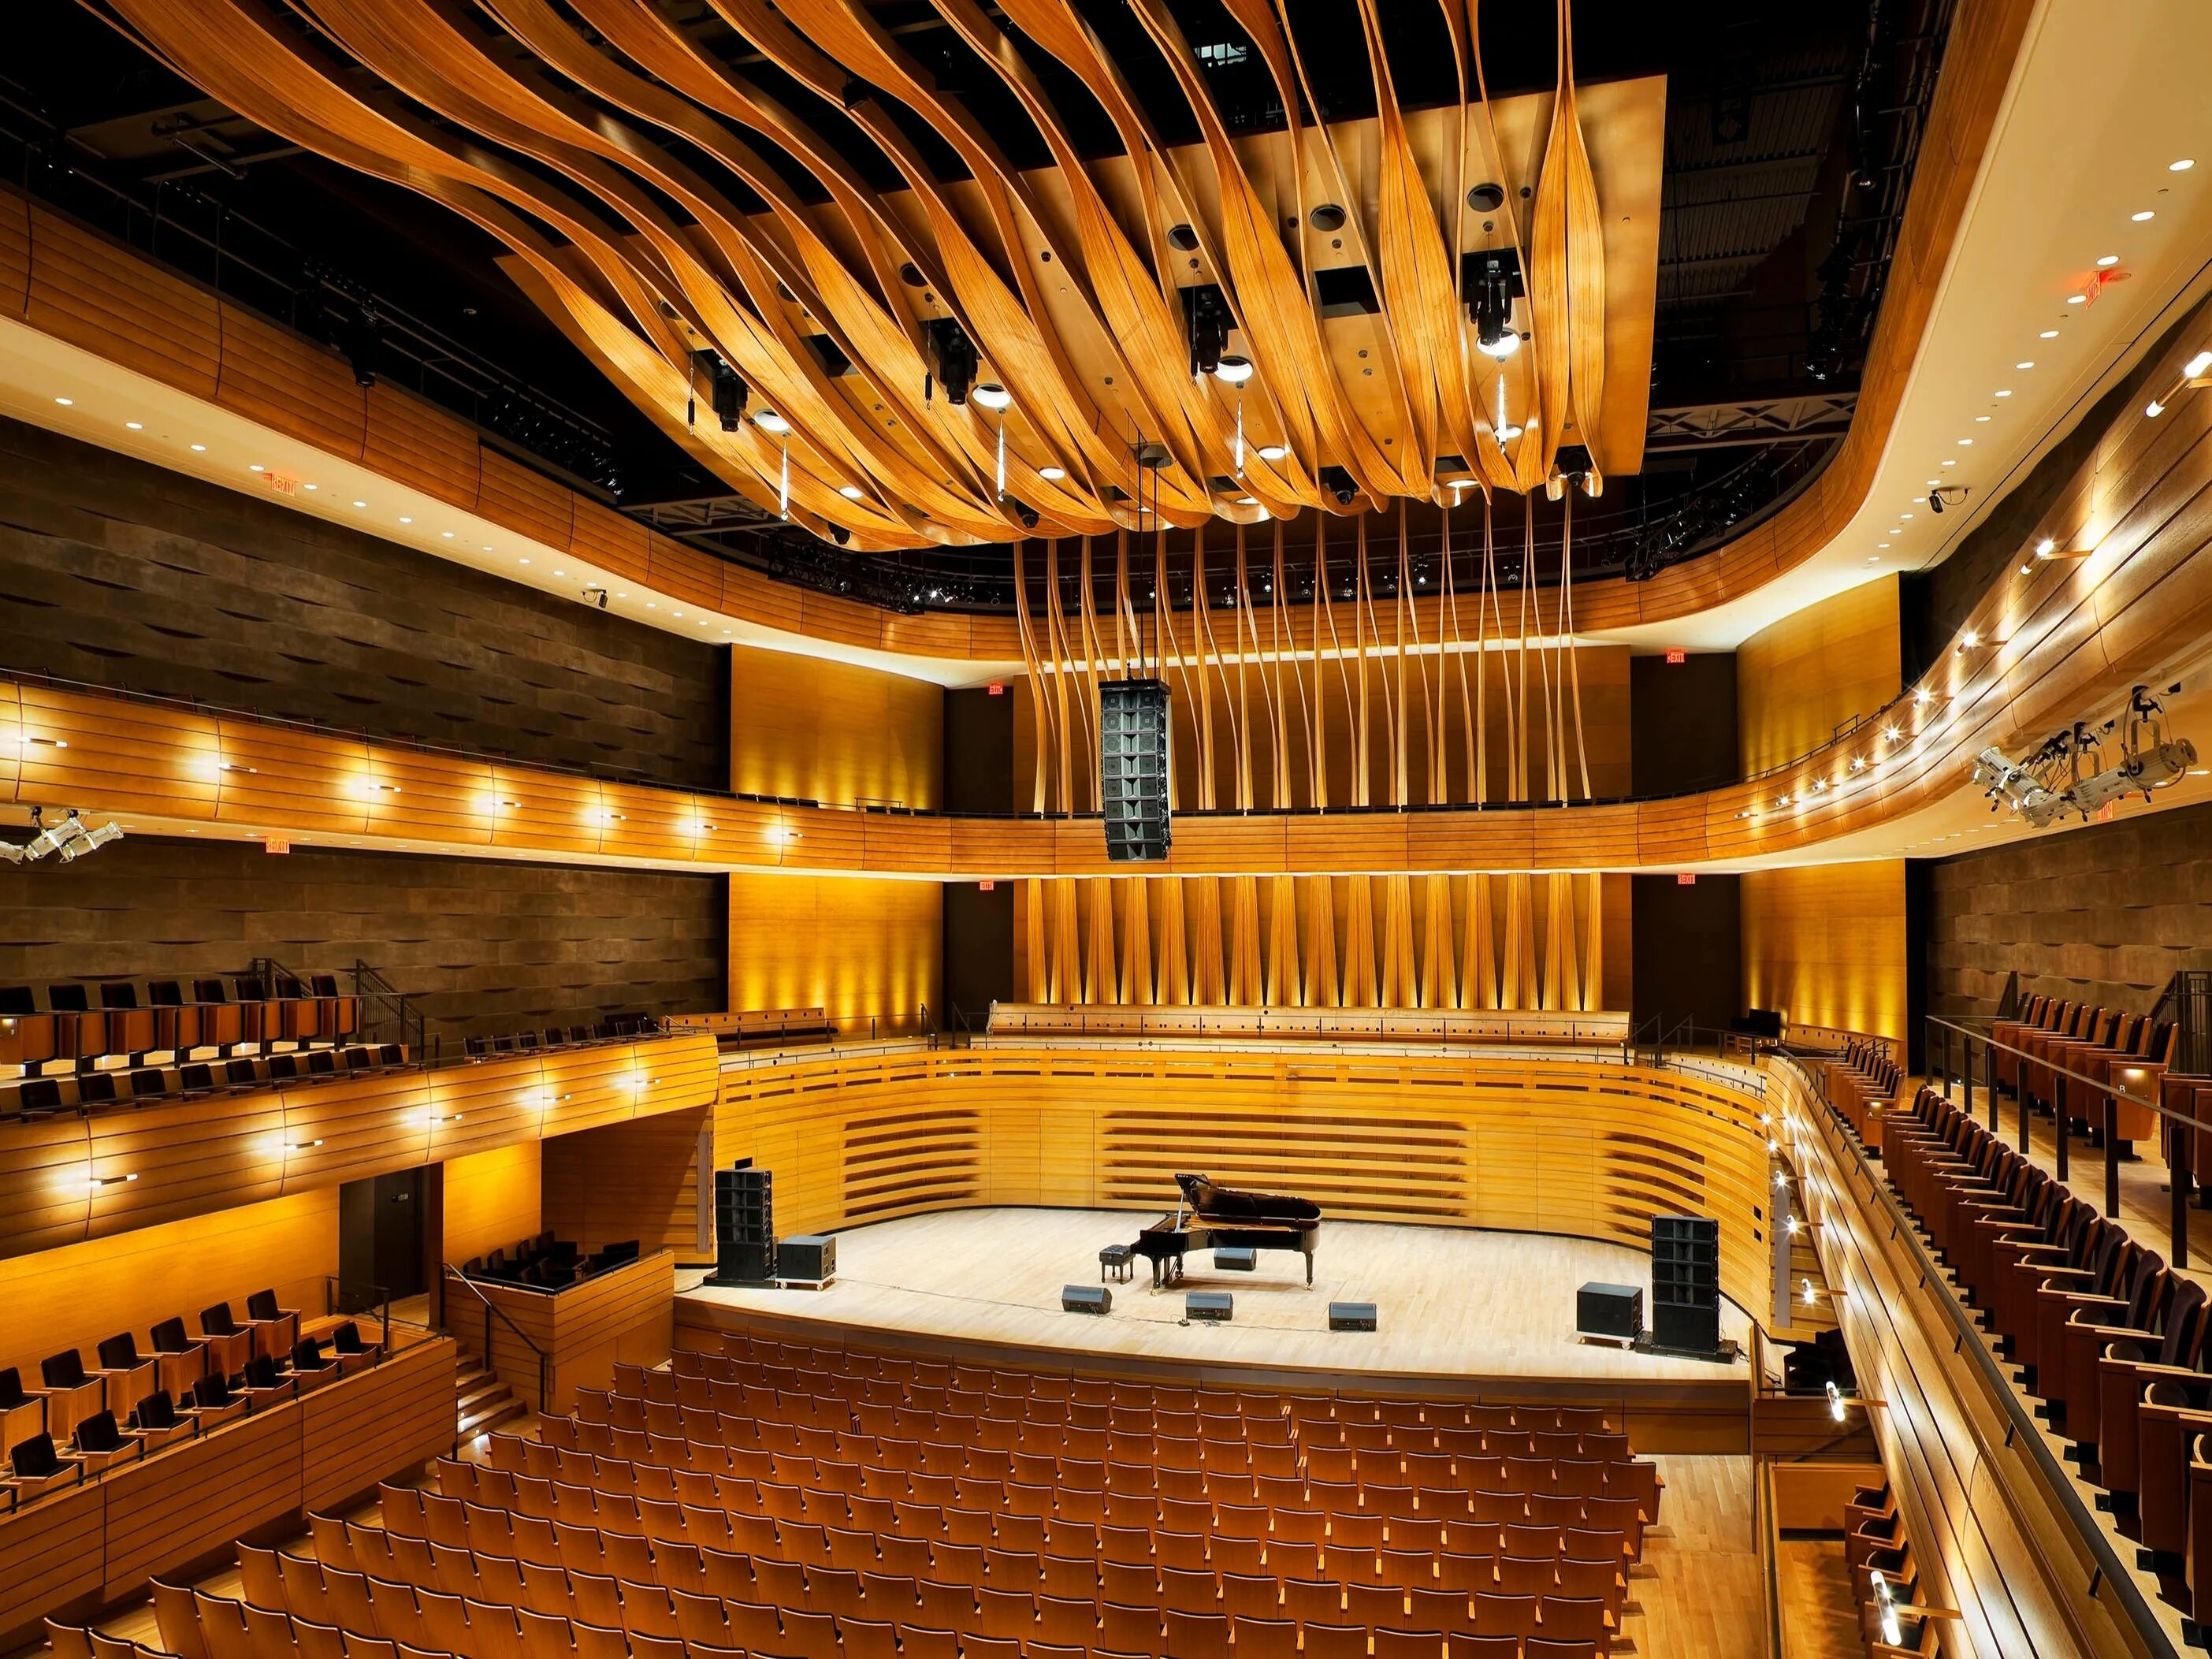 Koerner Hall, Royal Conservatory of Music зал. Концертный зал Торонто. Королевская музыкальная консерватория Торонто. Концертный зал Concert Hall. Небольшой концертный зал